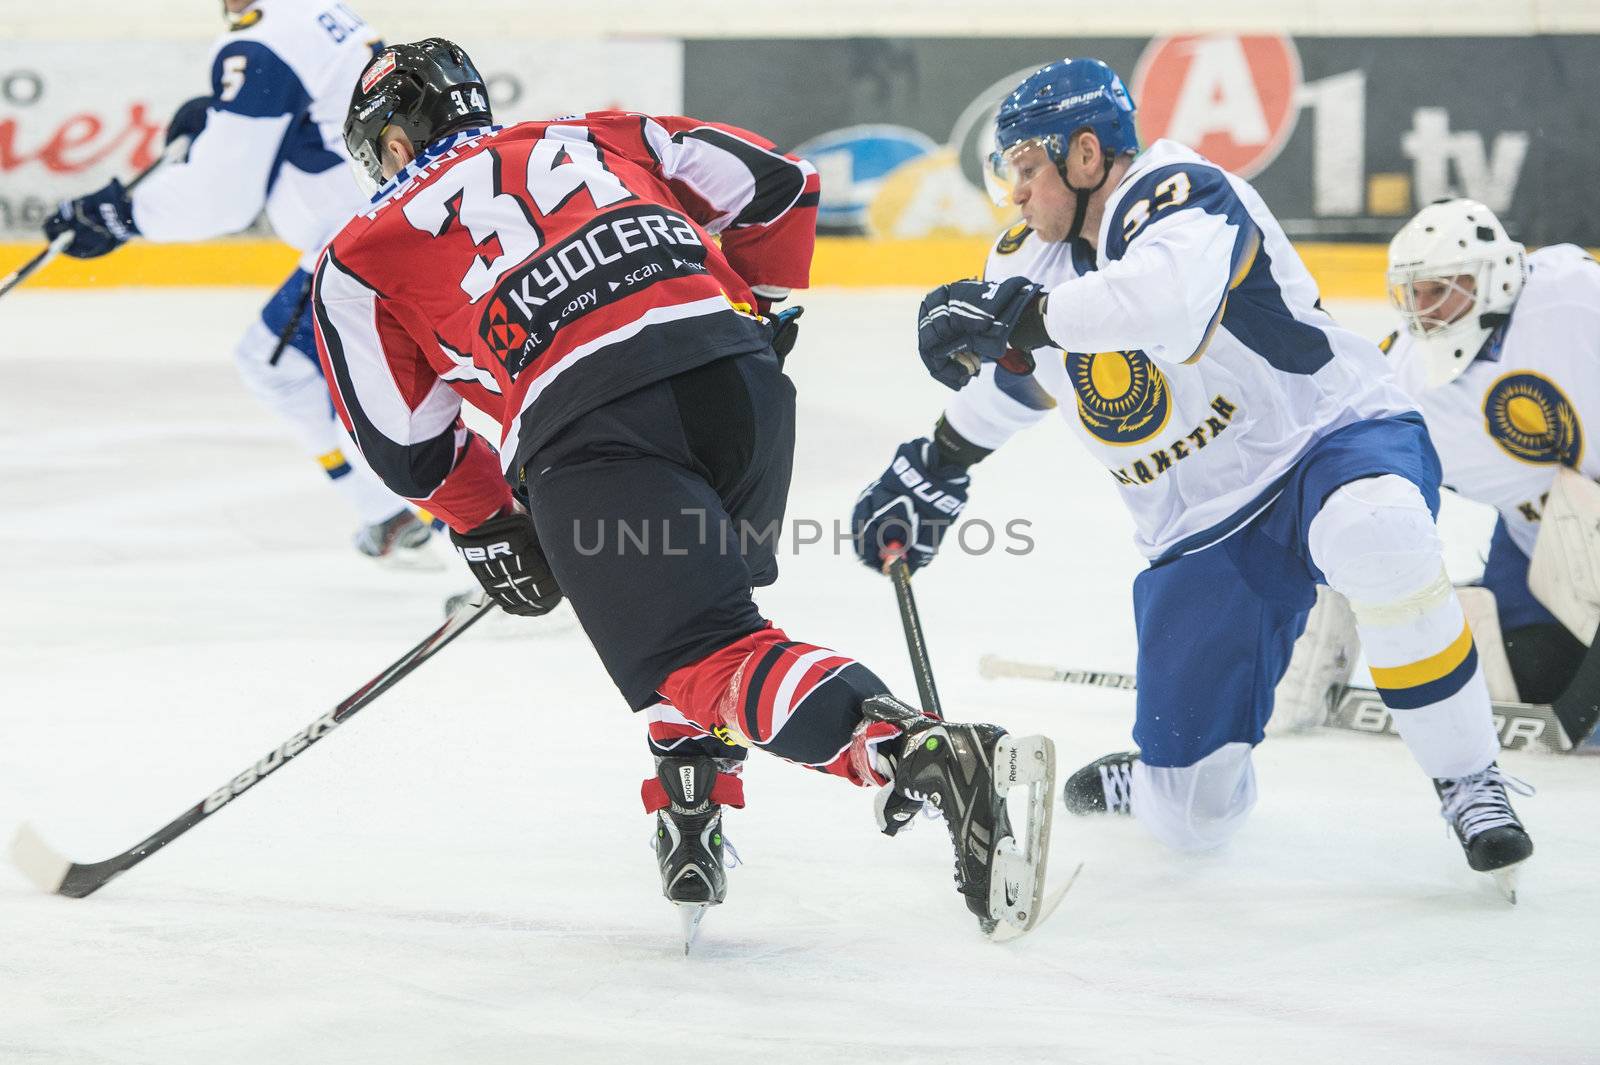 VIENNA - FEB 3: International hockey game between Austria and Kazakhstan. Markus Peintner shoots the puck, but Vitali Kolesnik makes the save on February 3, 2013 at Albert Schultz Halle in Vienna, Austria.